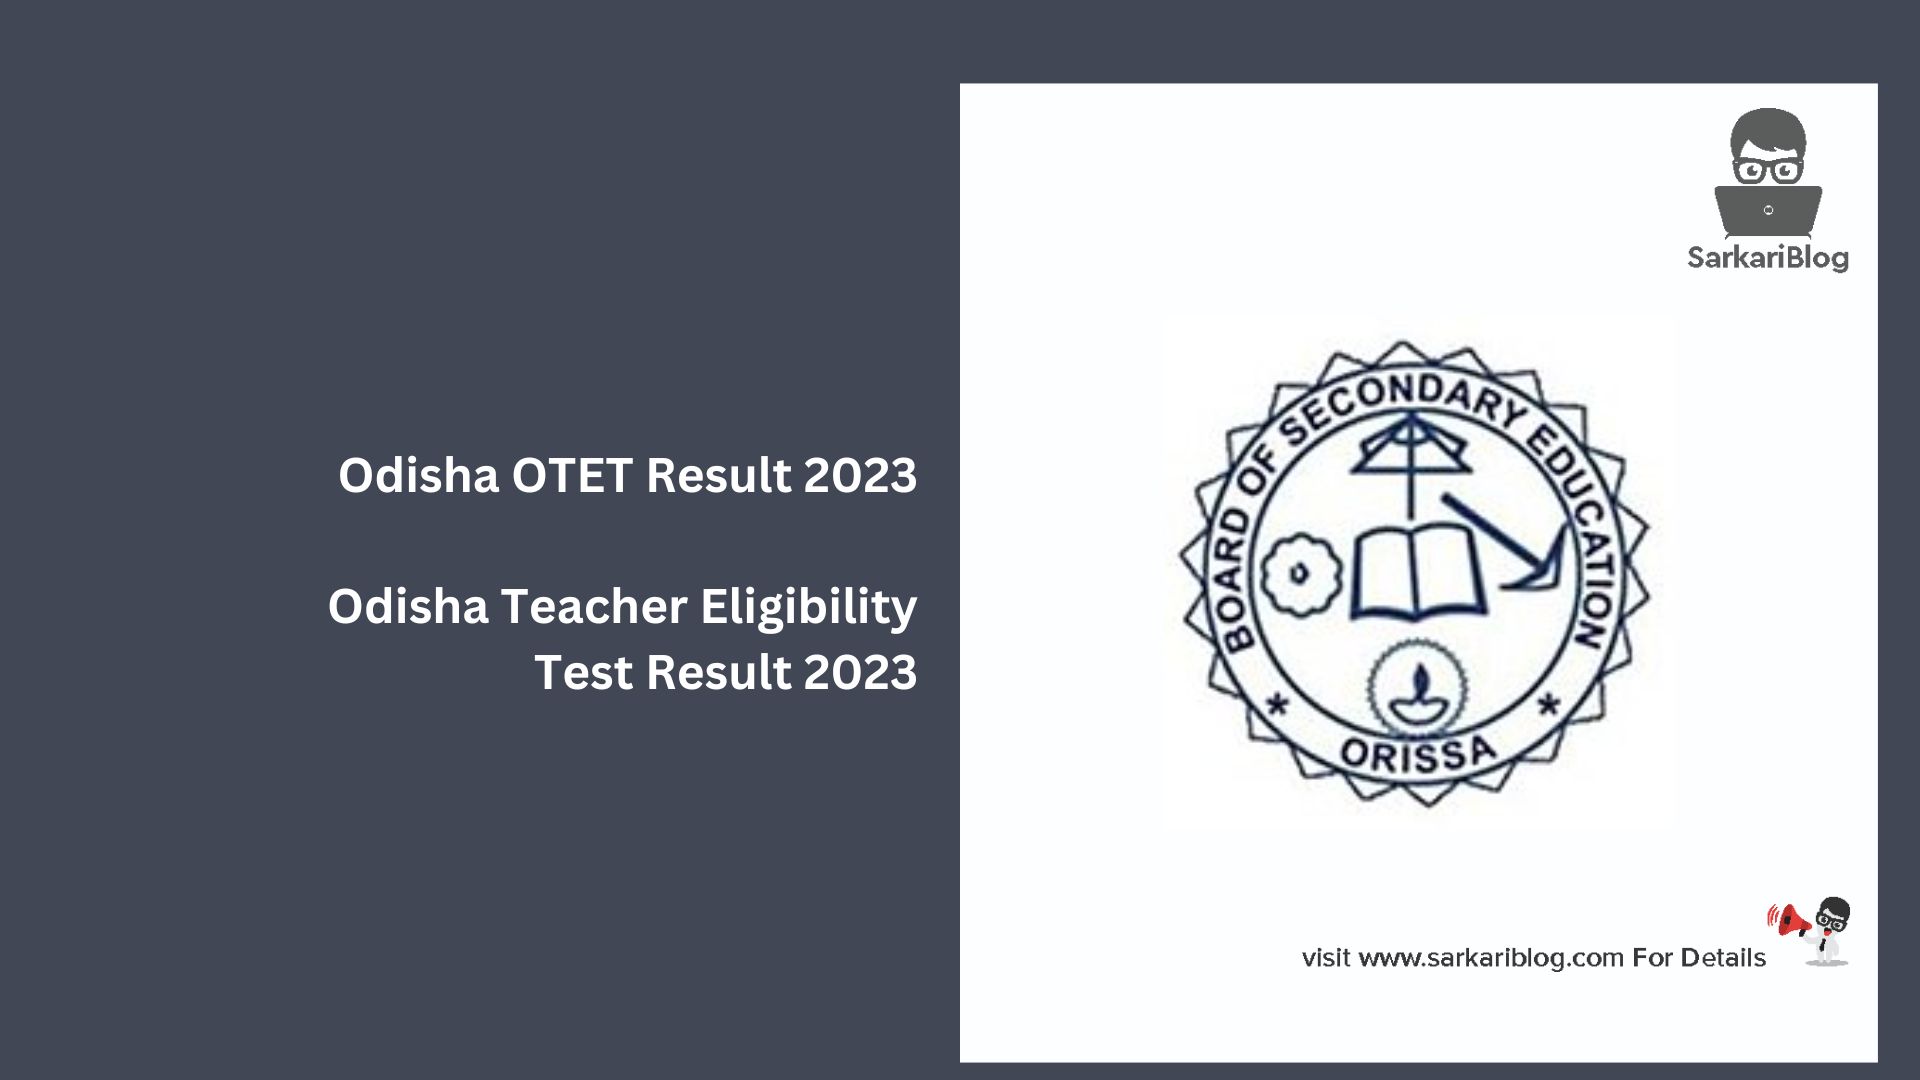 Odisha OTET Result 2023